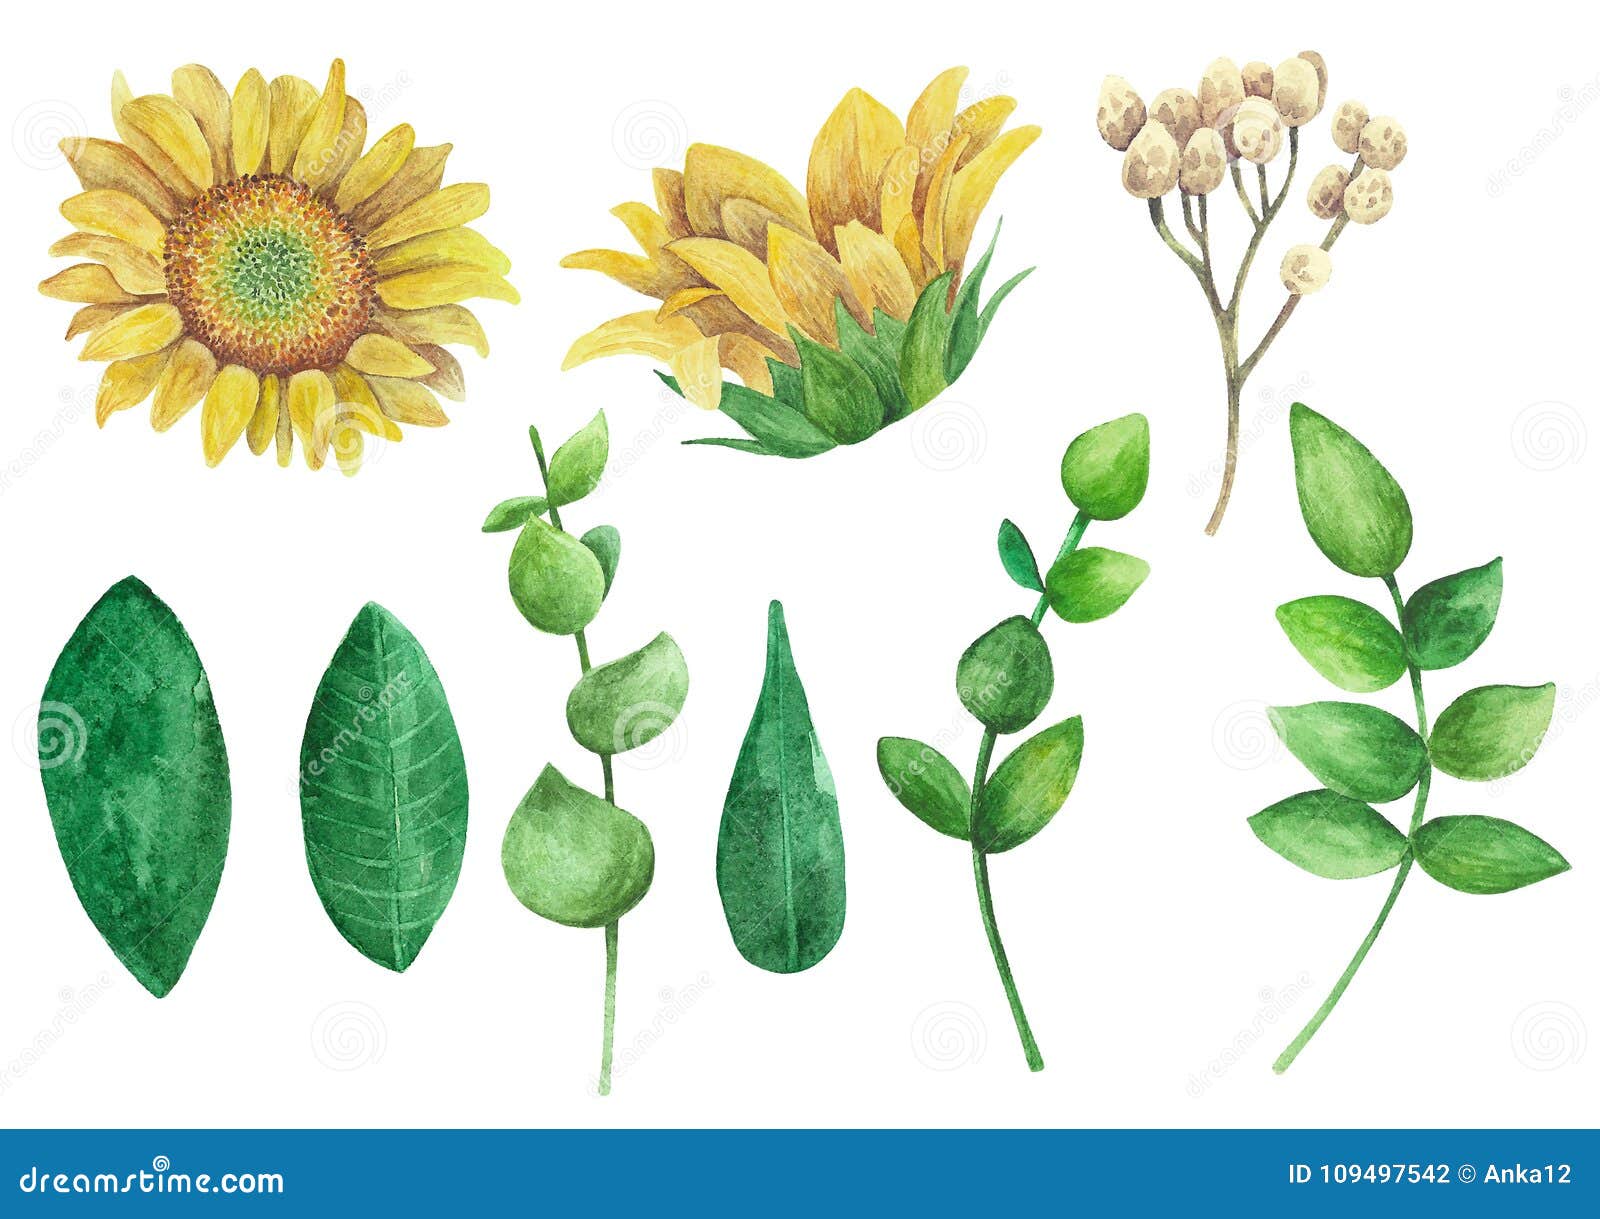 sunflowers  clipart. rustic flowers clip art watercolor